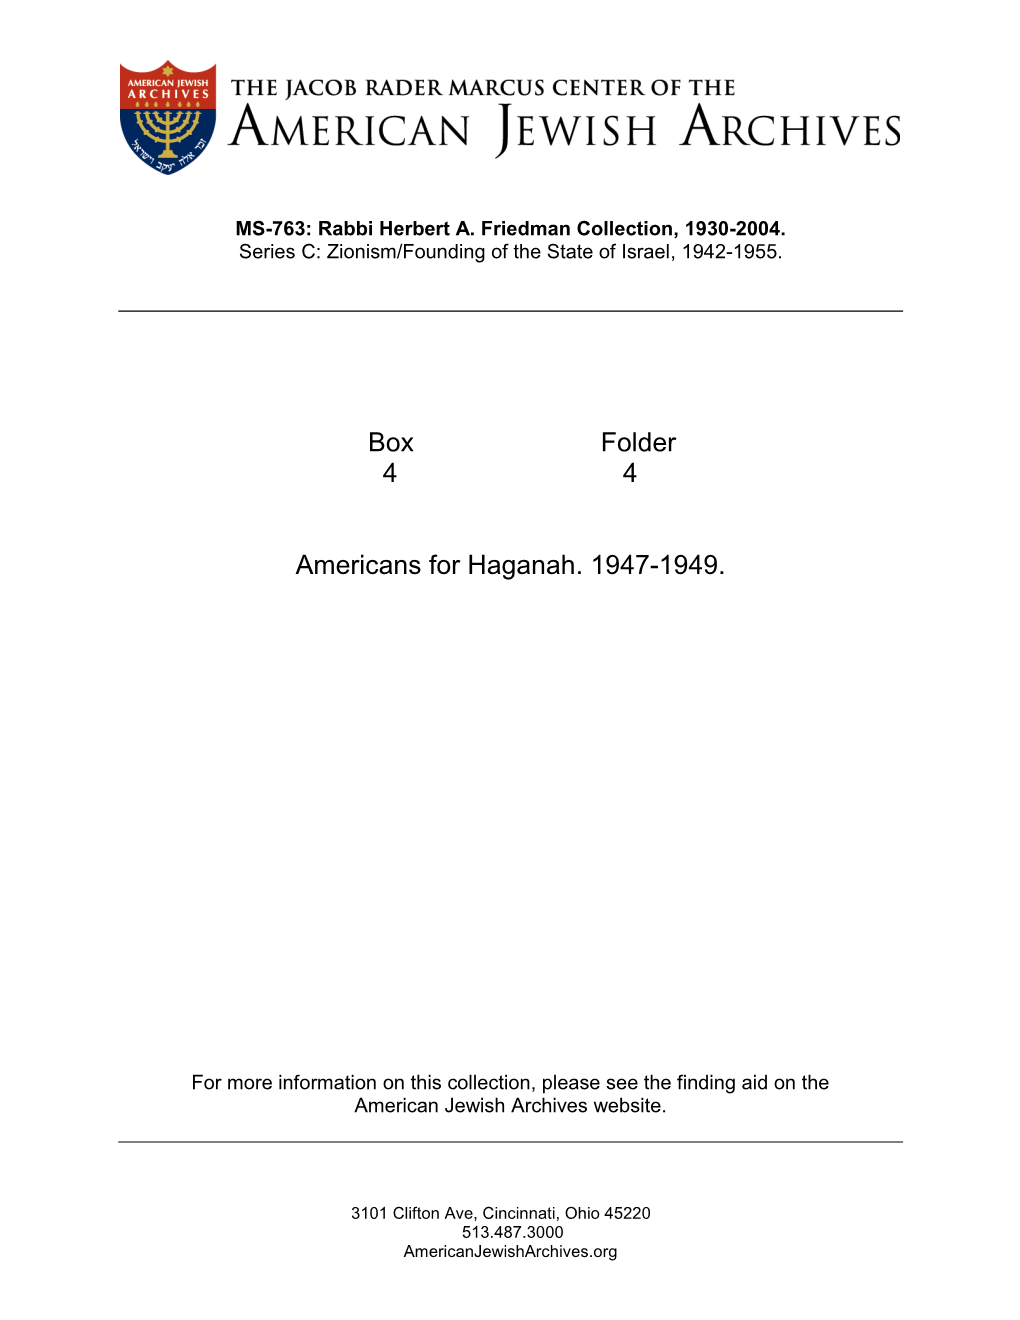 Box Folder 4 4 Americans for Haganah. 1947-1949